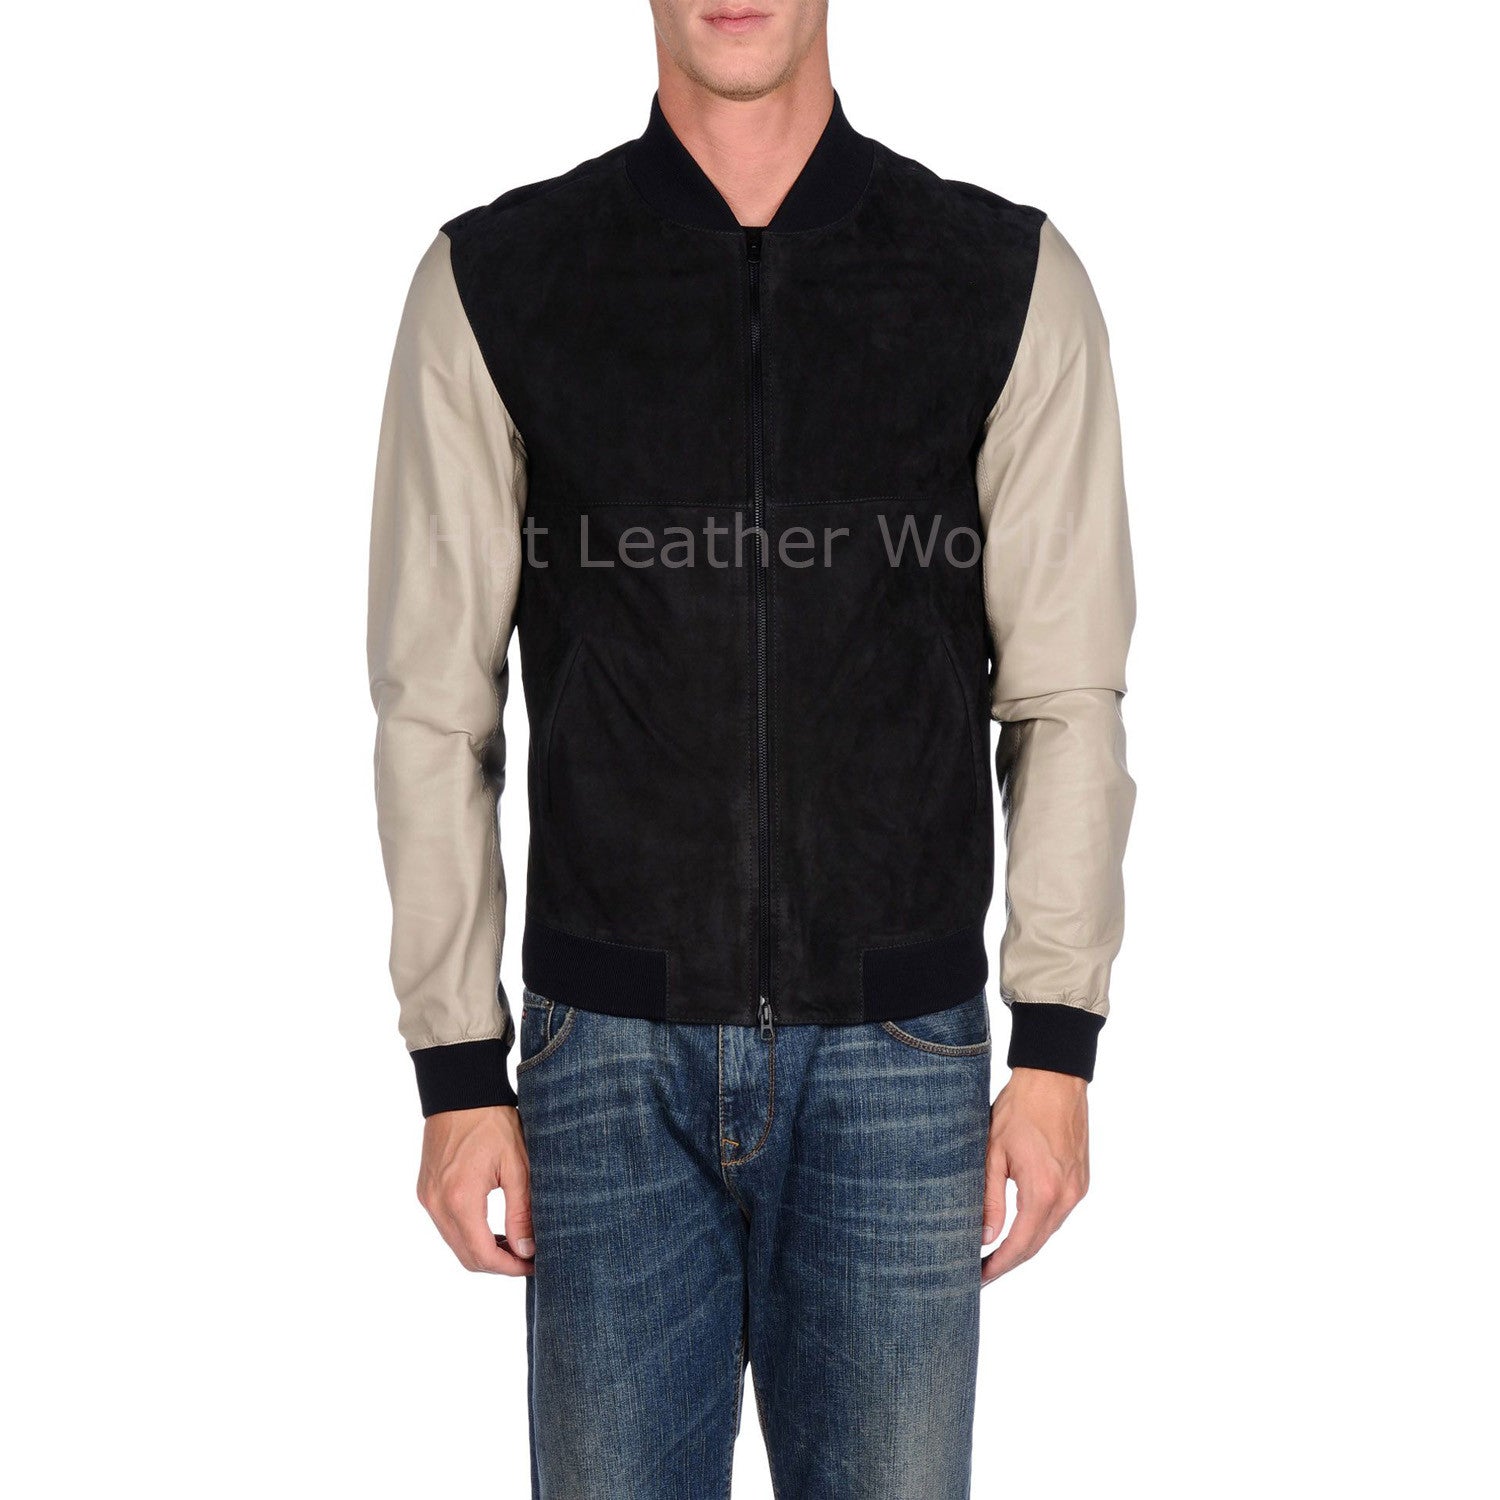 Suede Leather Contrast Style Men Biker Jacket -  HOTLEATHERWORLD